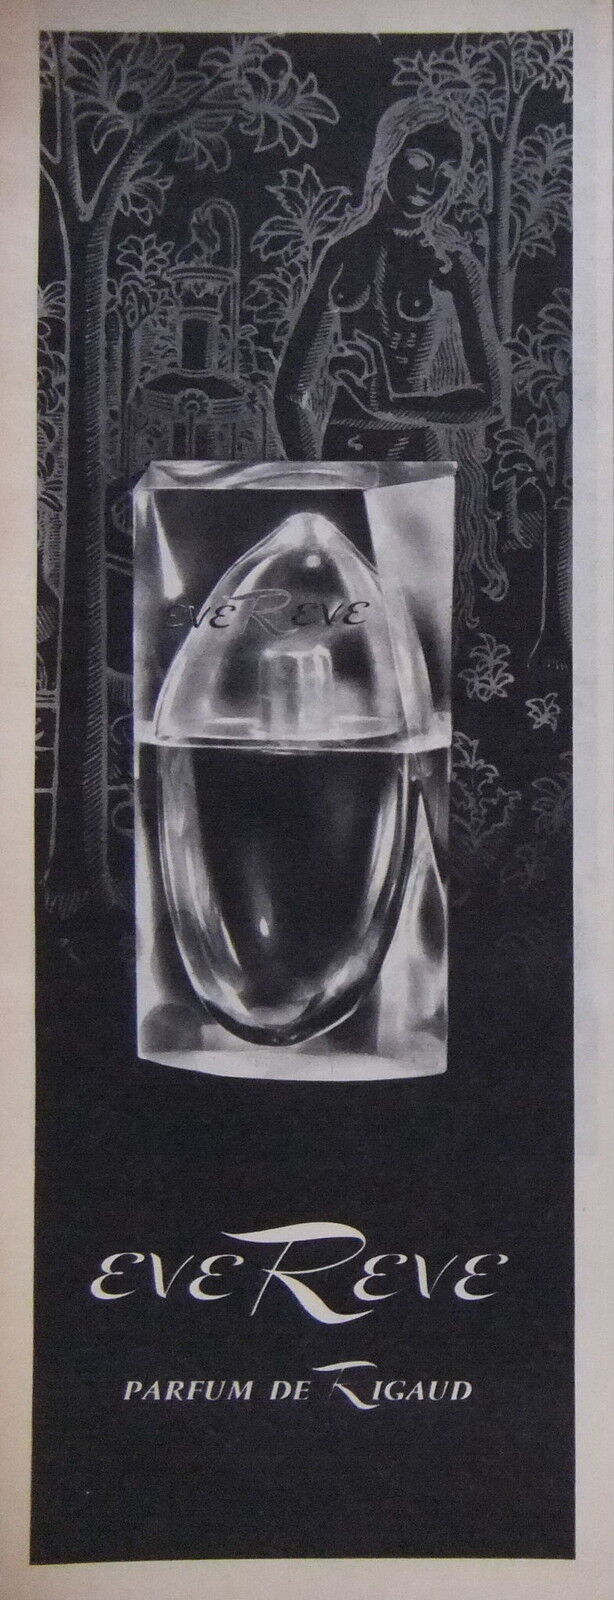 1958 EVE REVE PERFUME DE RIGAUD ADVERTISING - ADVERTISING